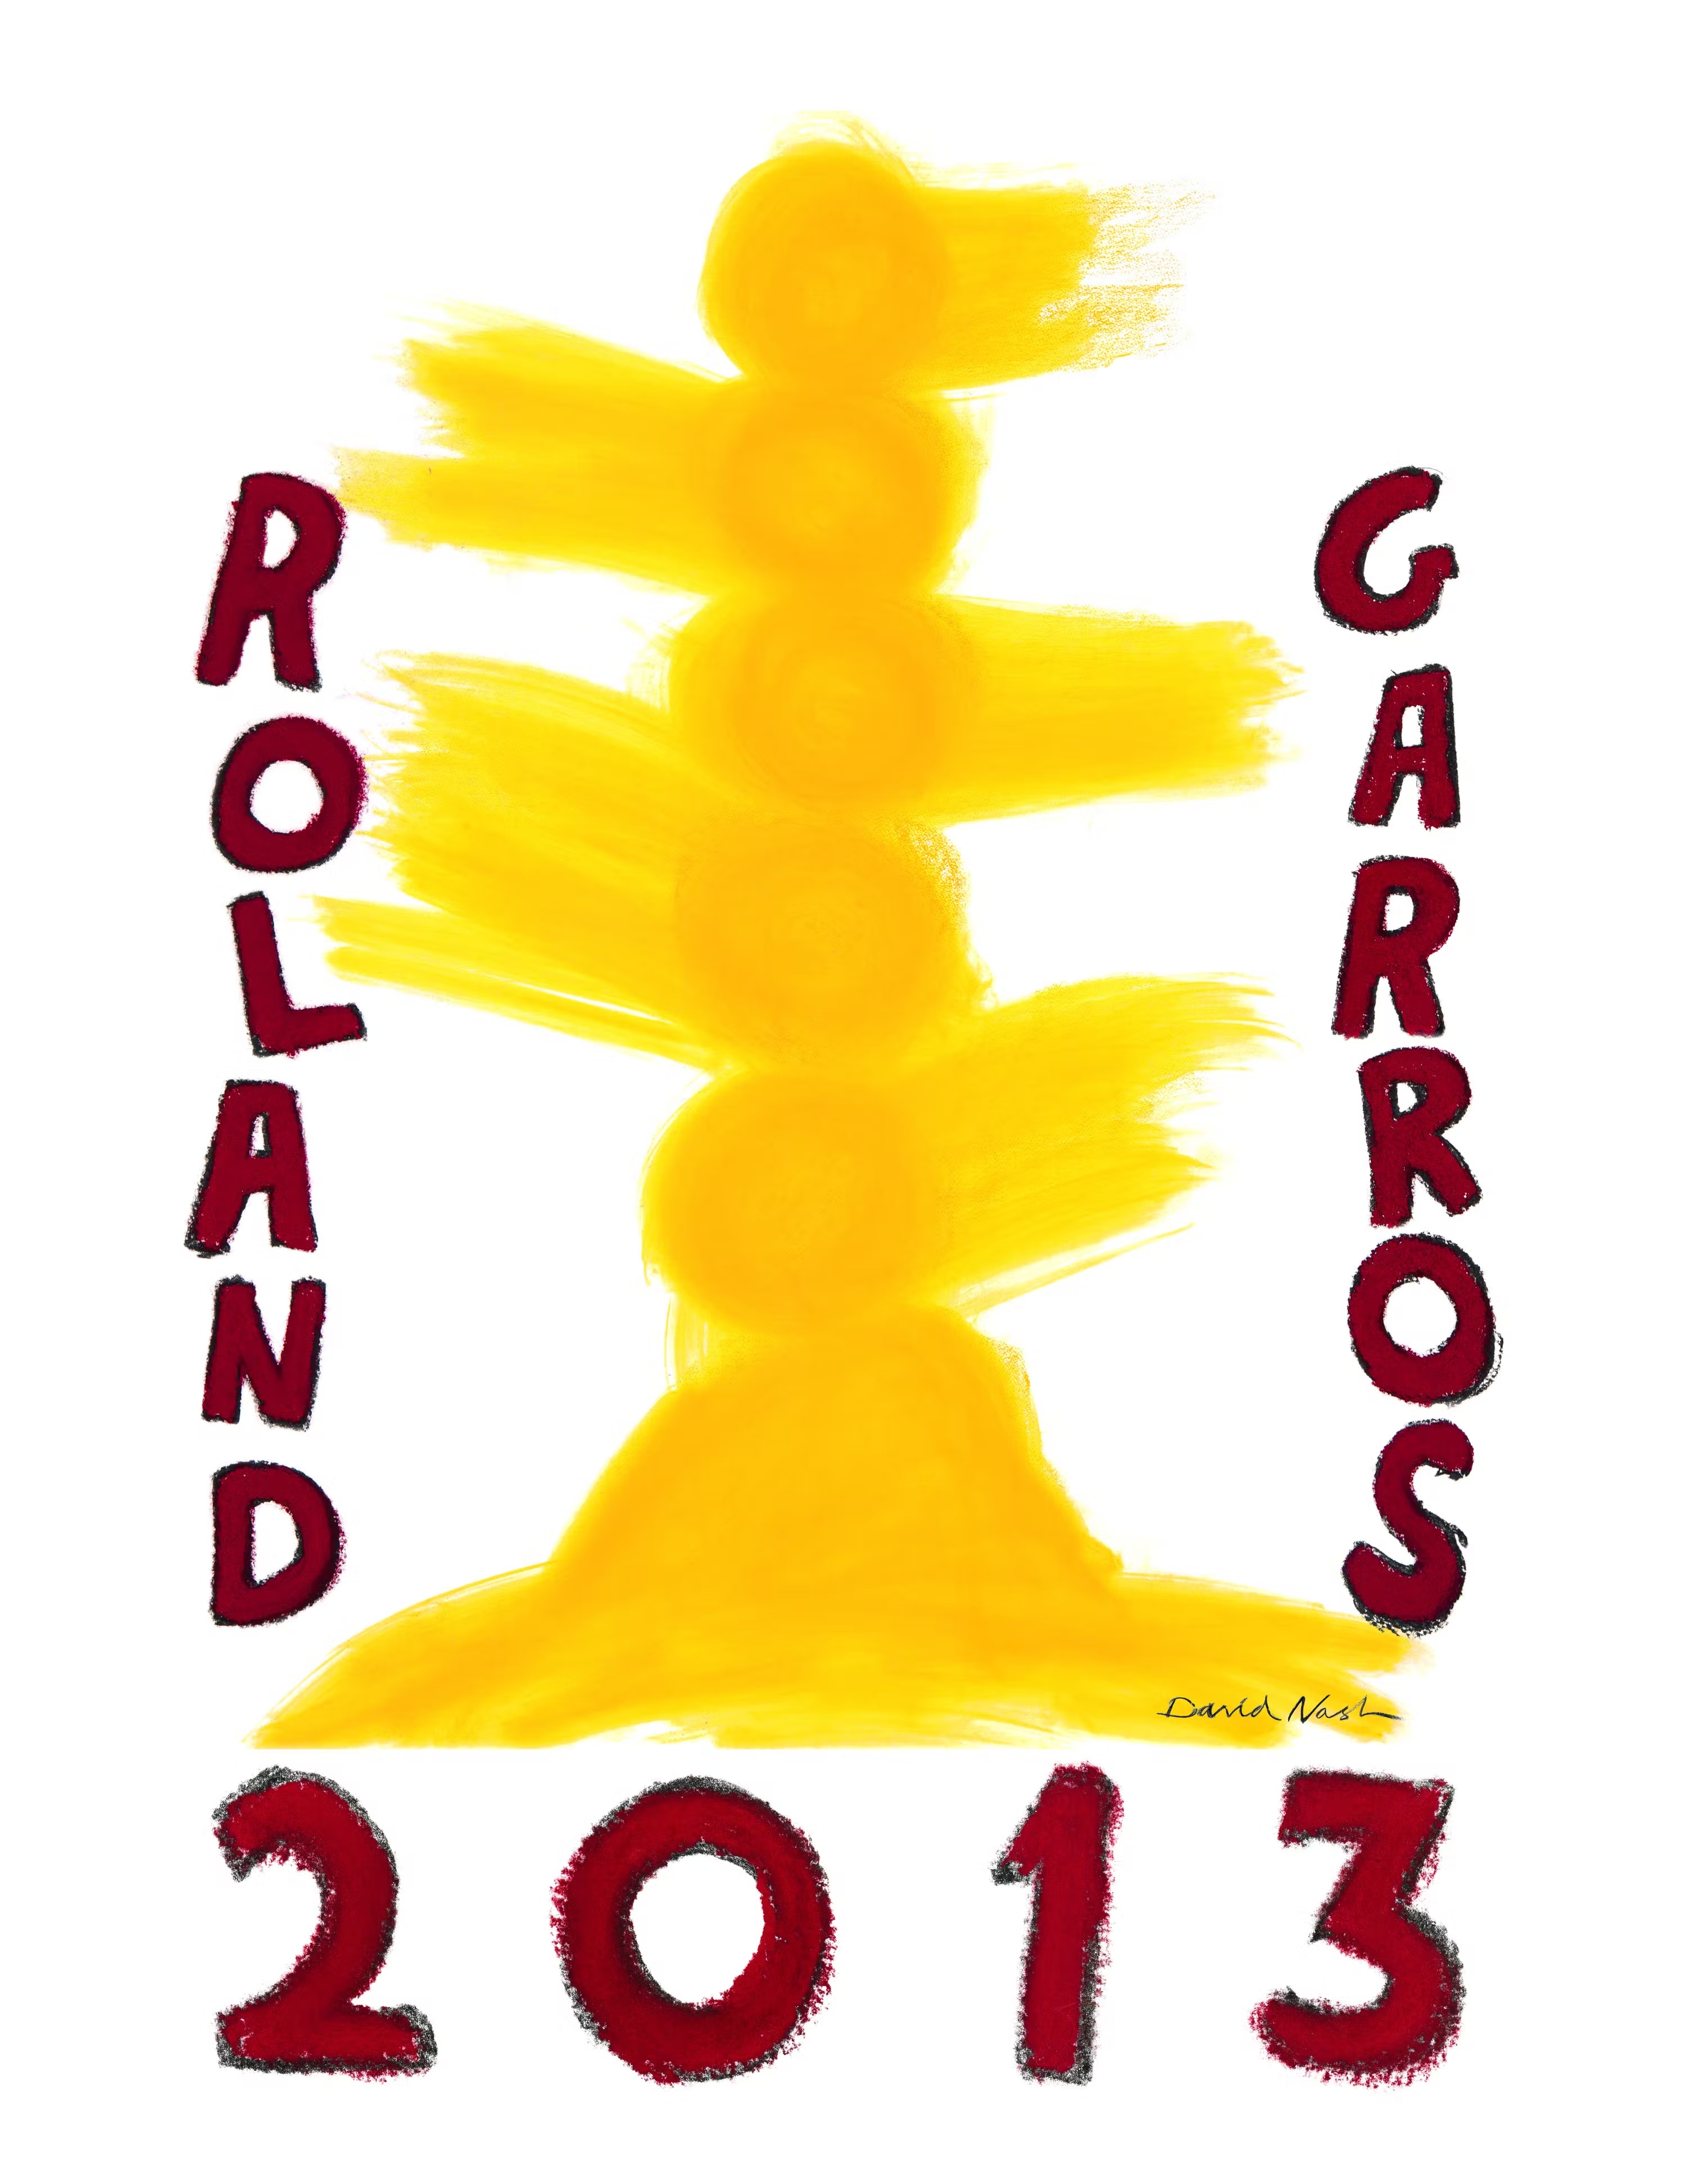 Roland Garros 2013 poster